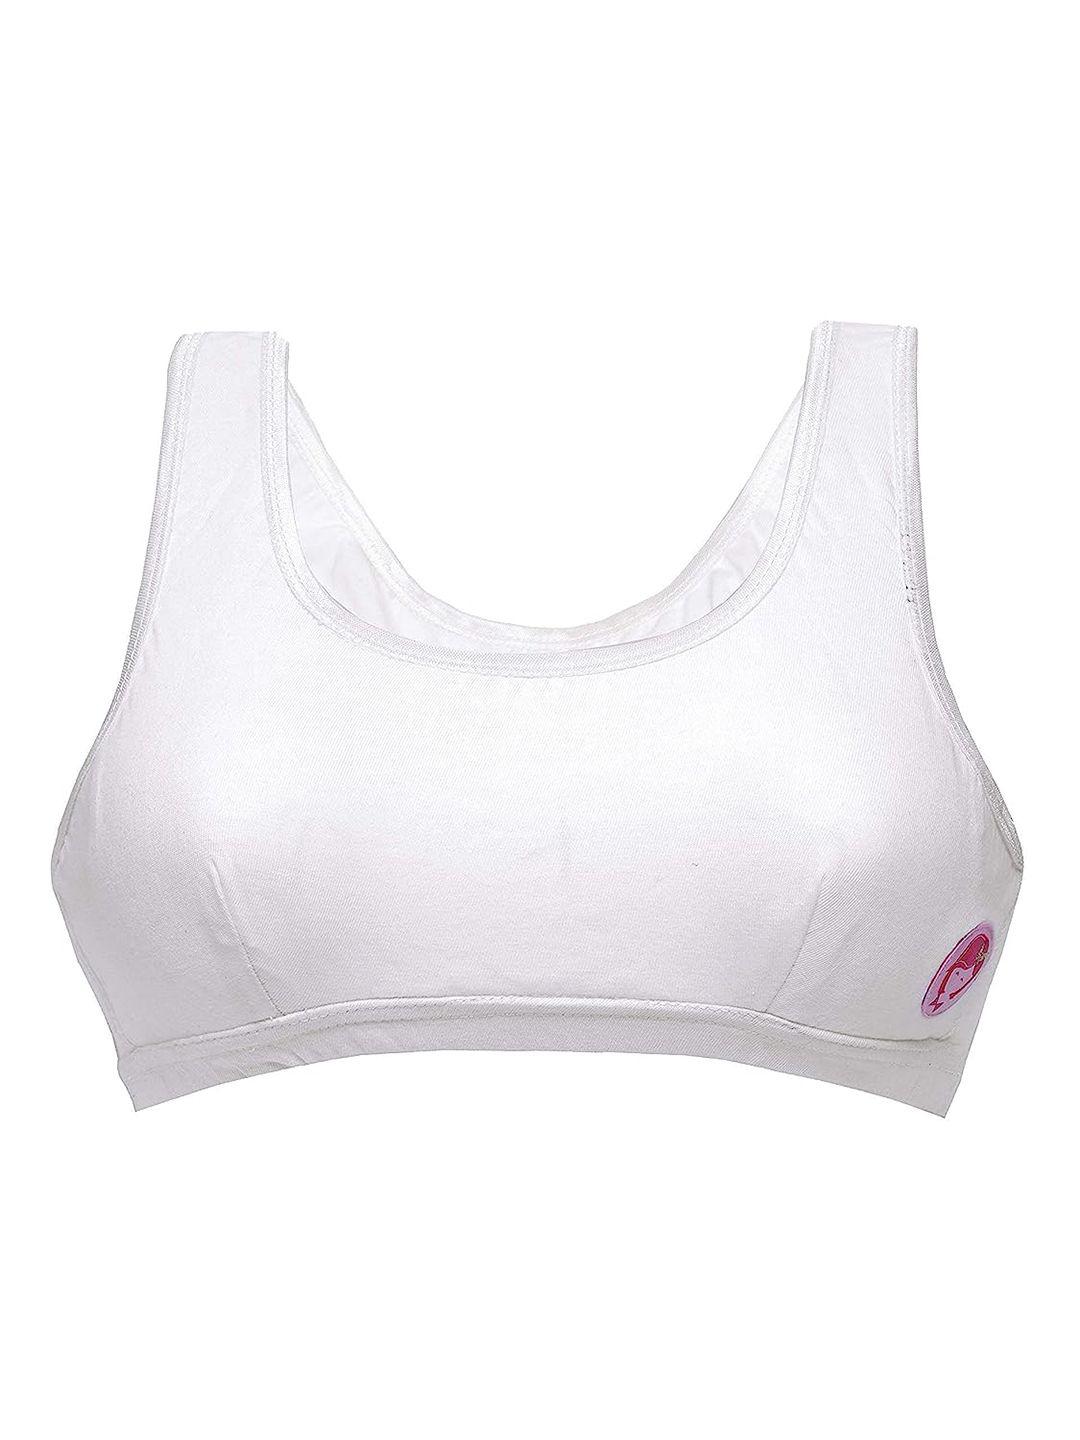 dchica non-padded coverage cotton sports bra